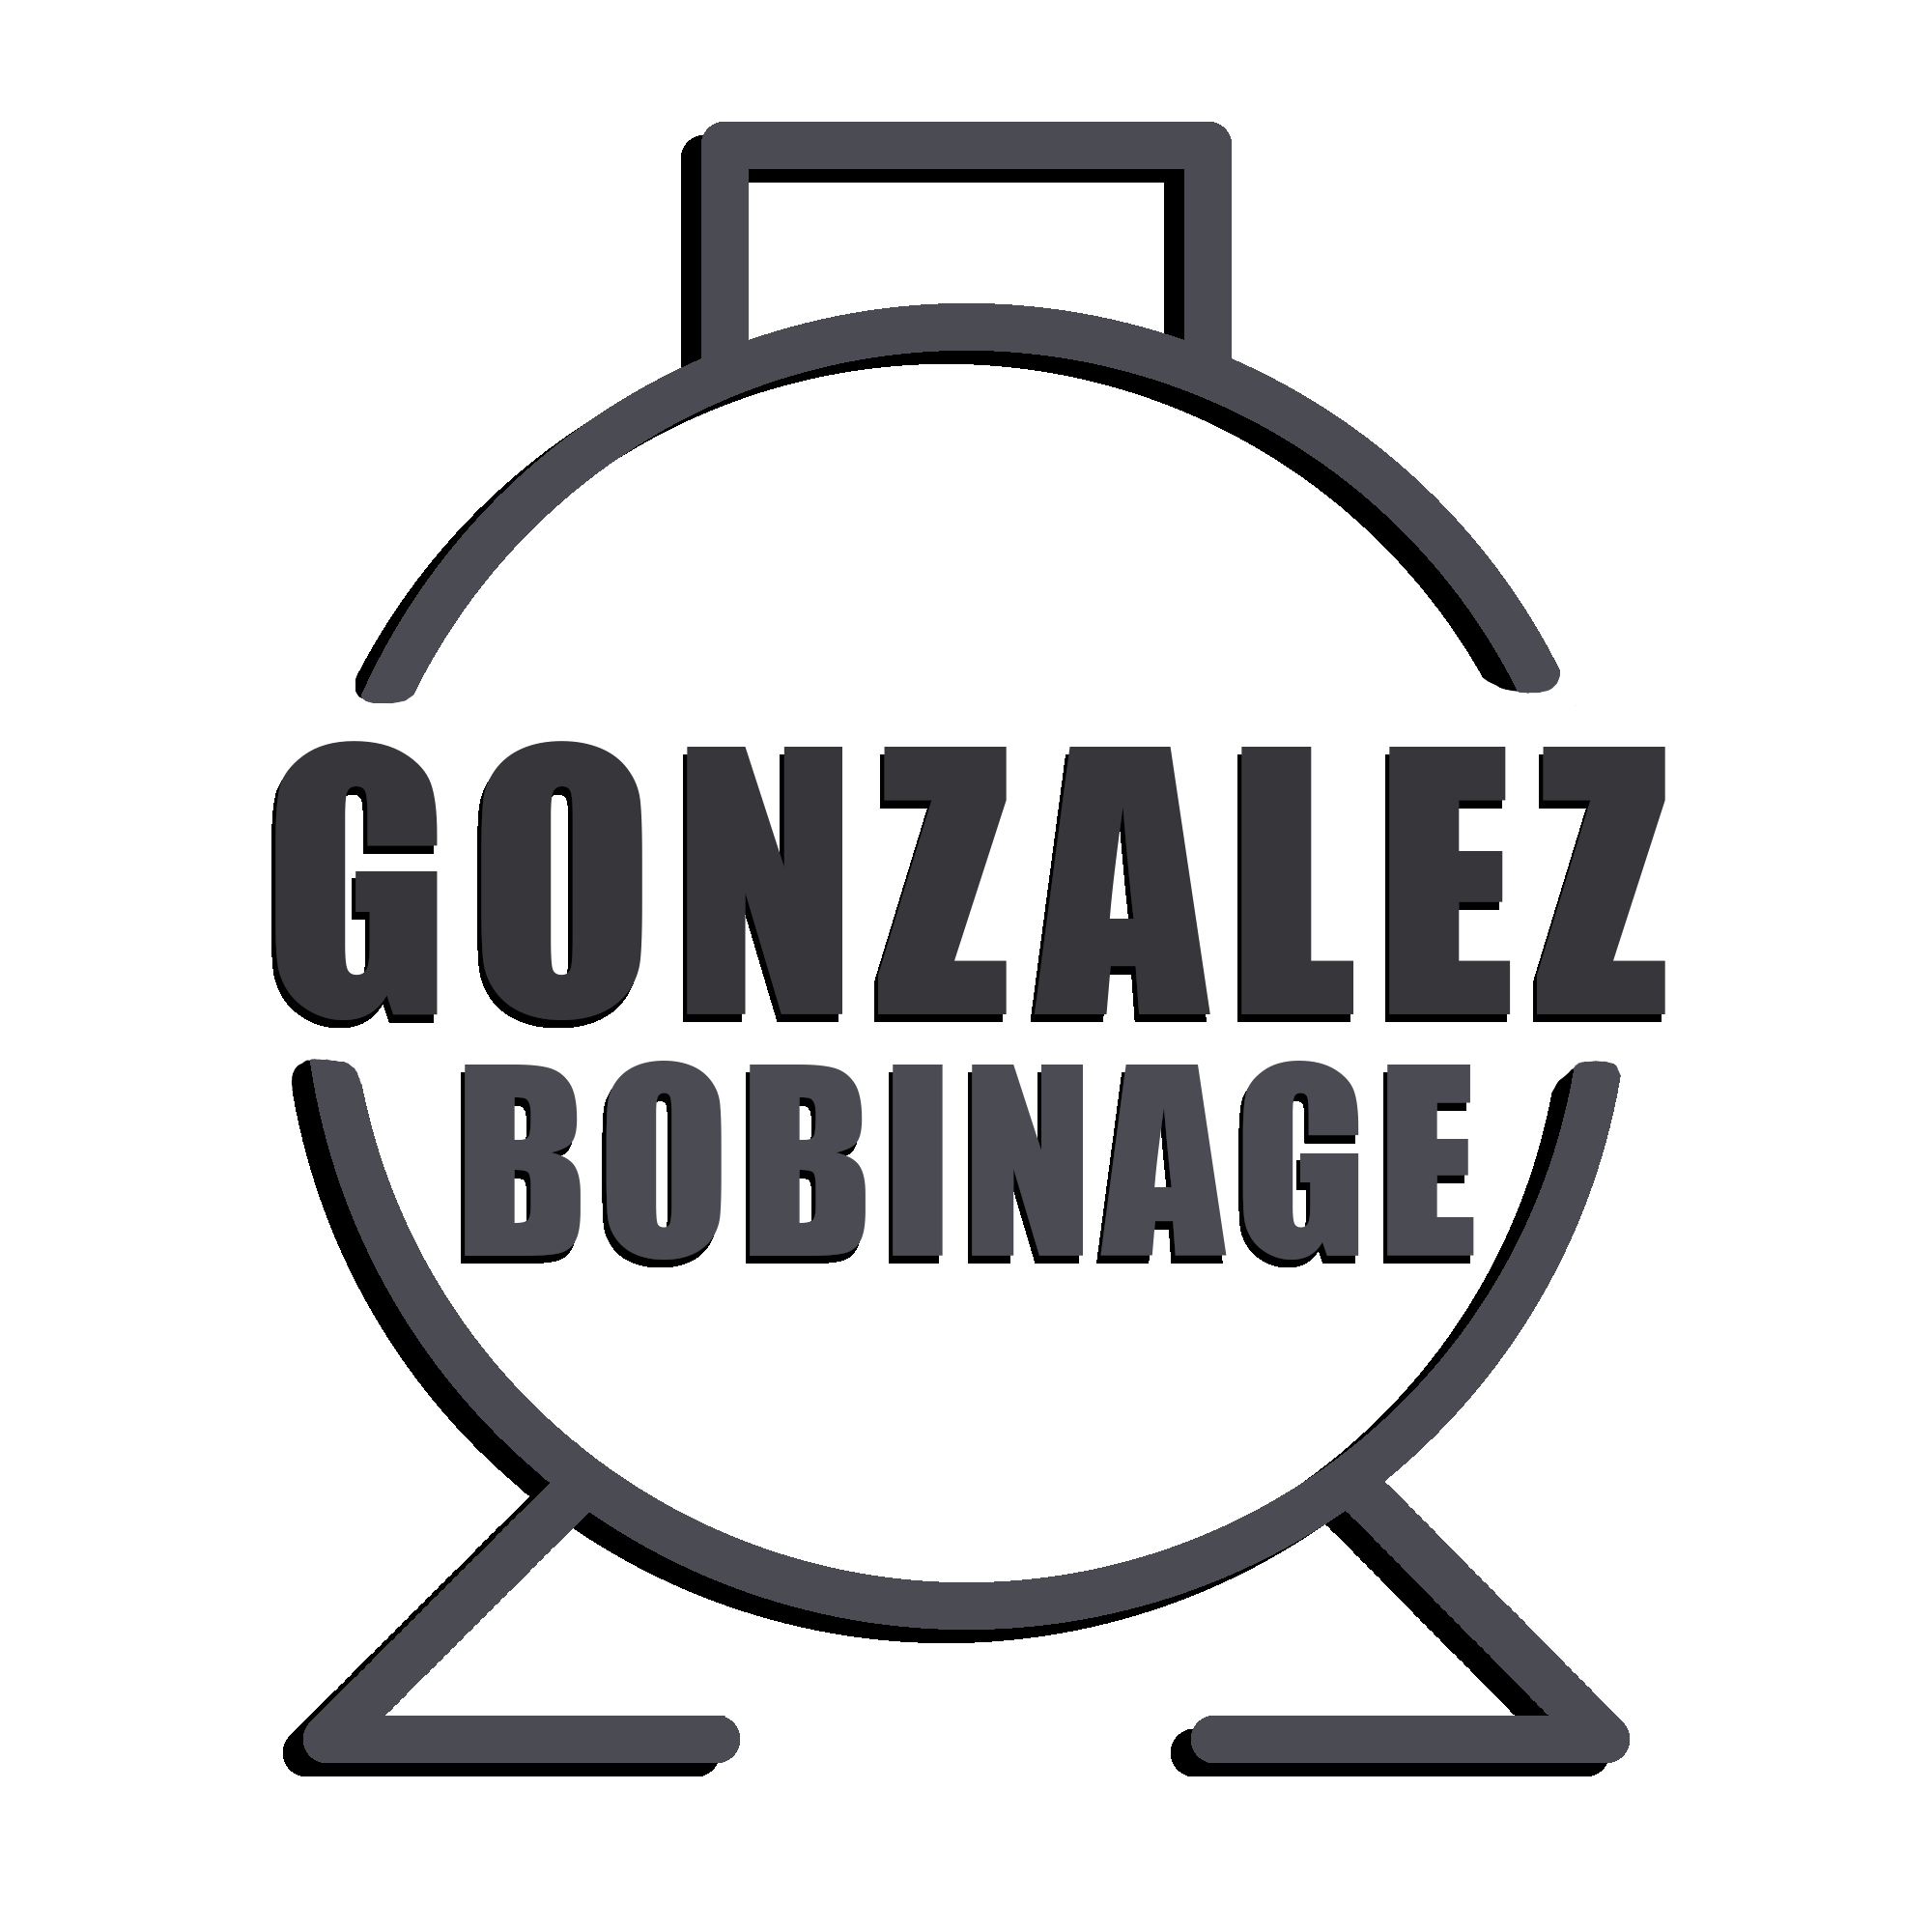 GONZALEZ Bobinage